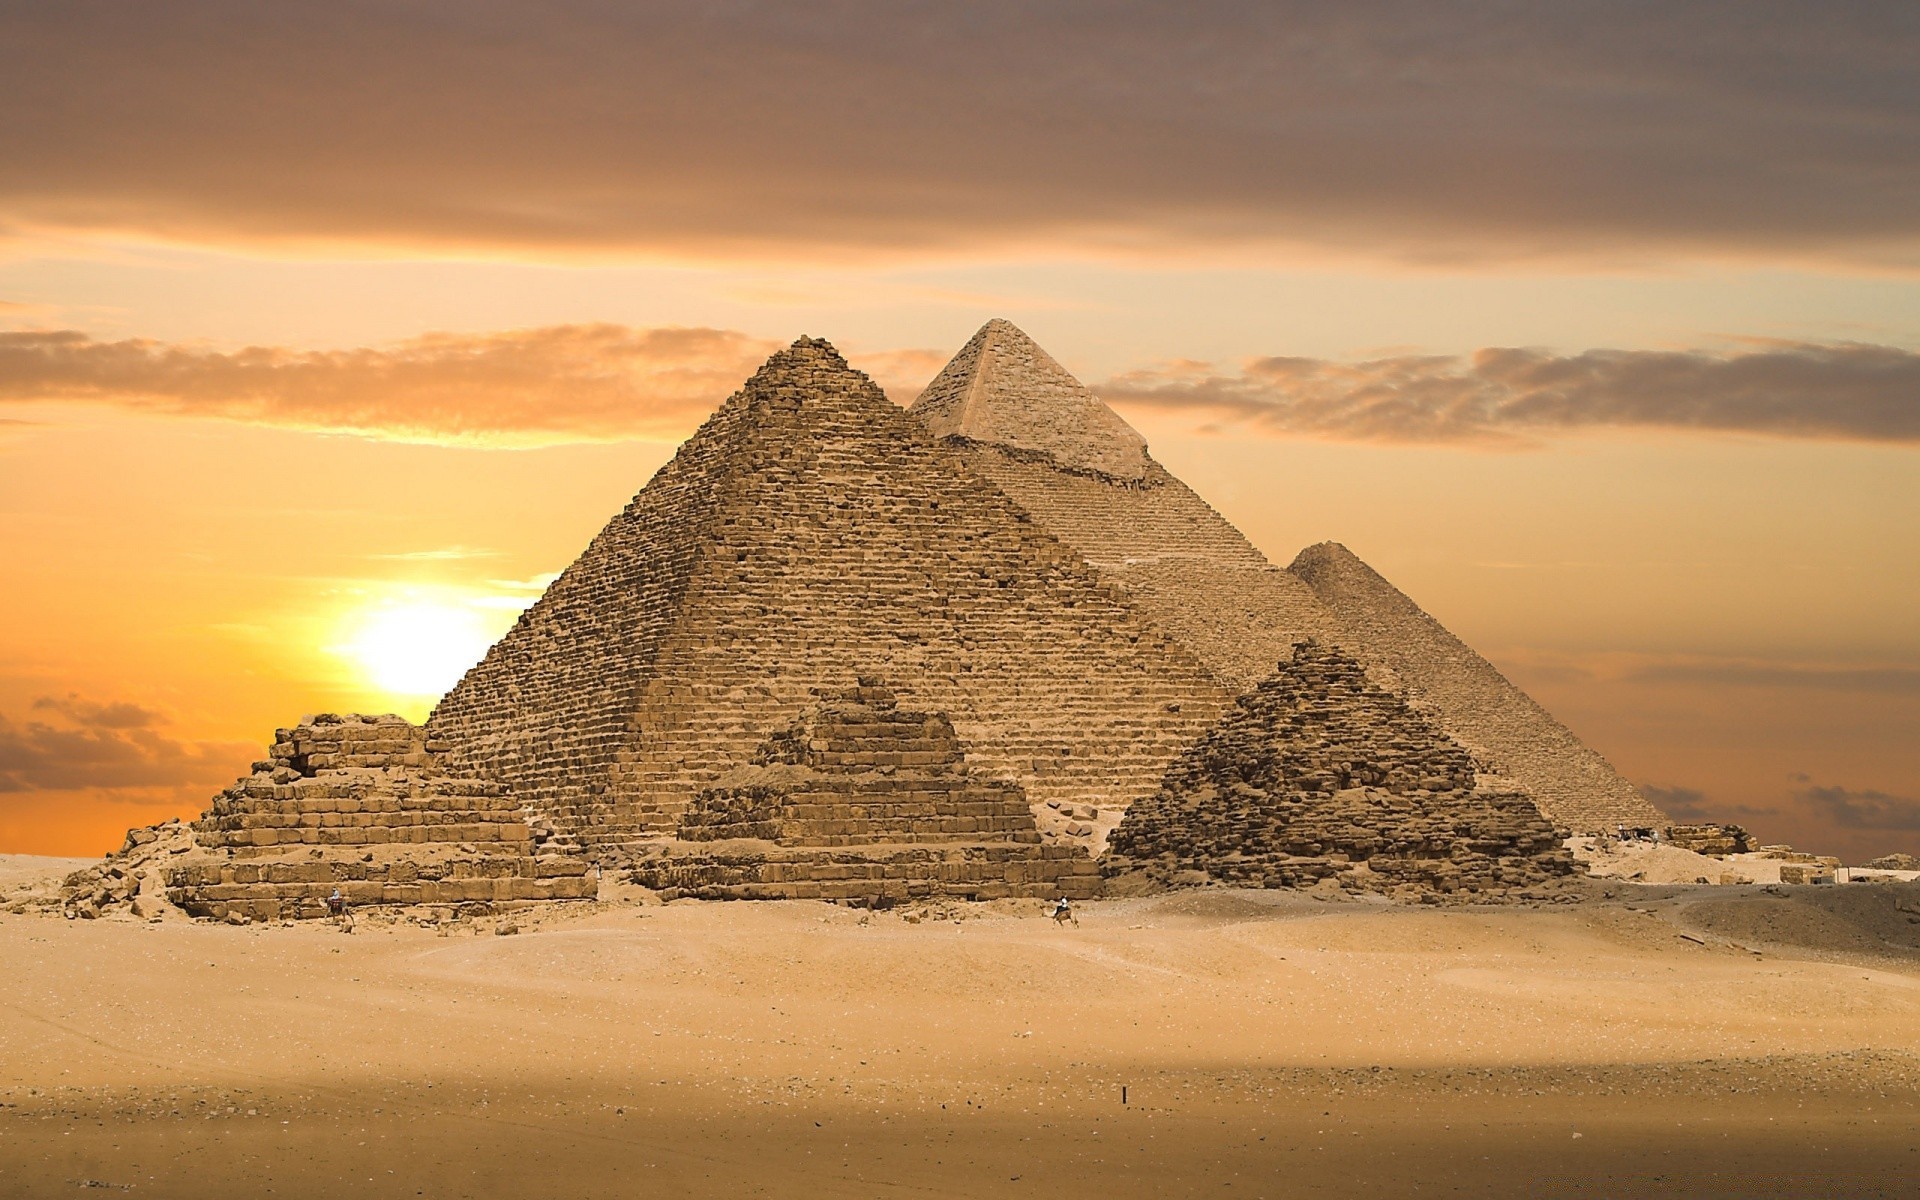 африка пирамида пустыня закат путешествия песок археология рассвет могила солнце фараон на открытом воздухе небо верблюд